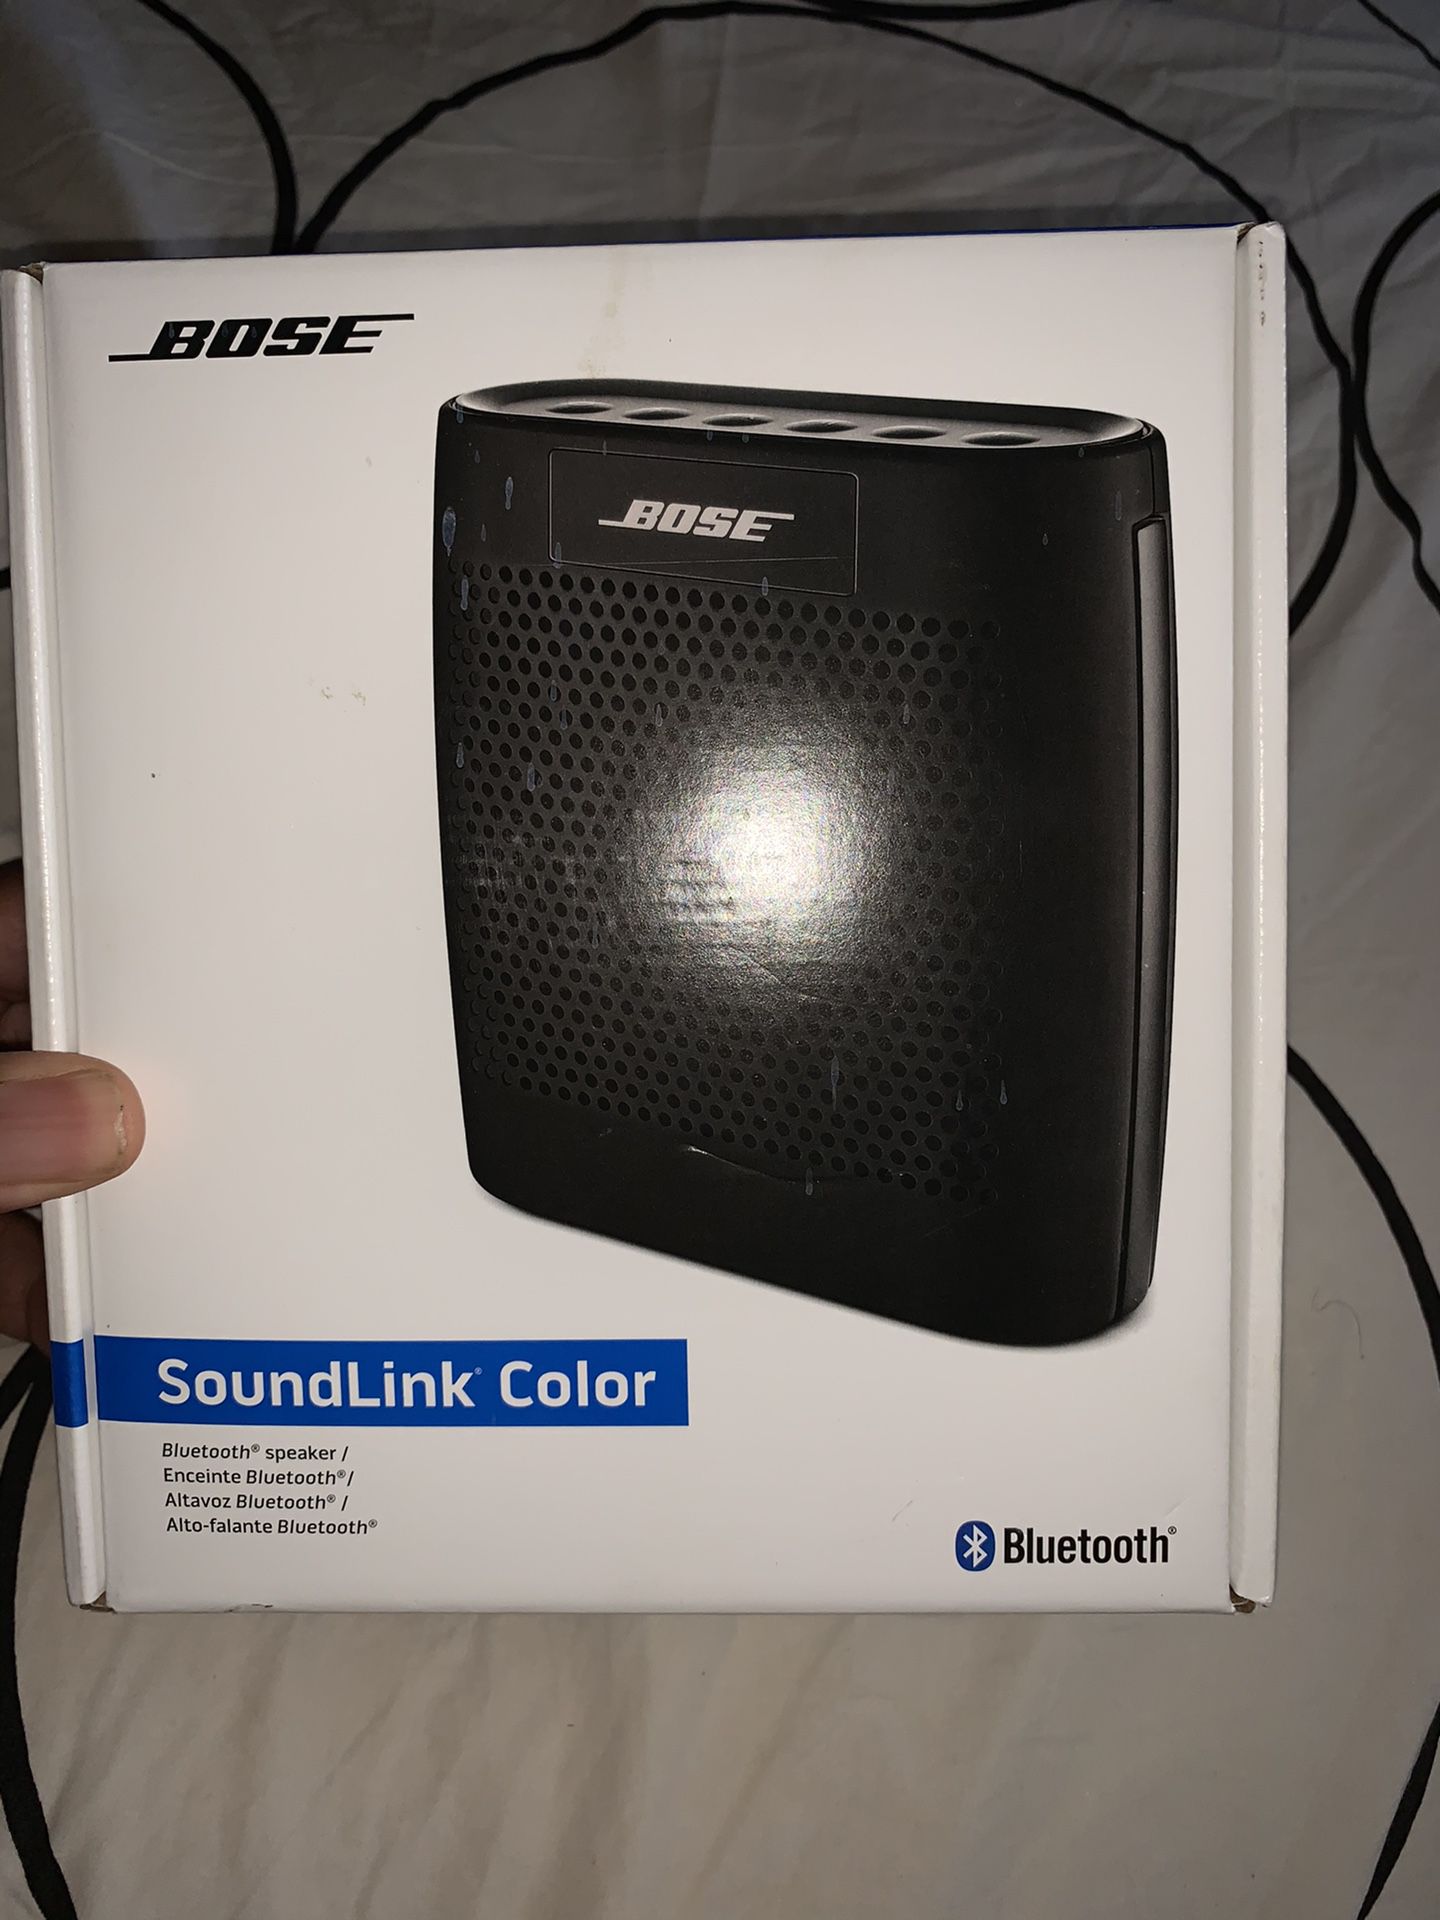 Bose wireless Bluetooth sound link color speaker